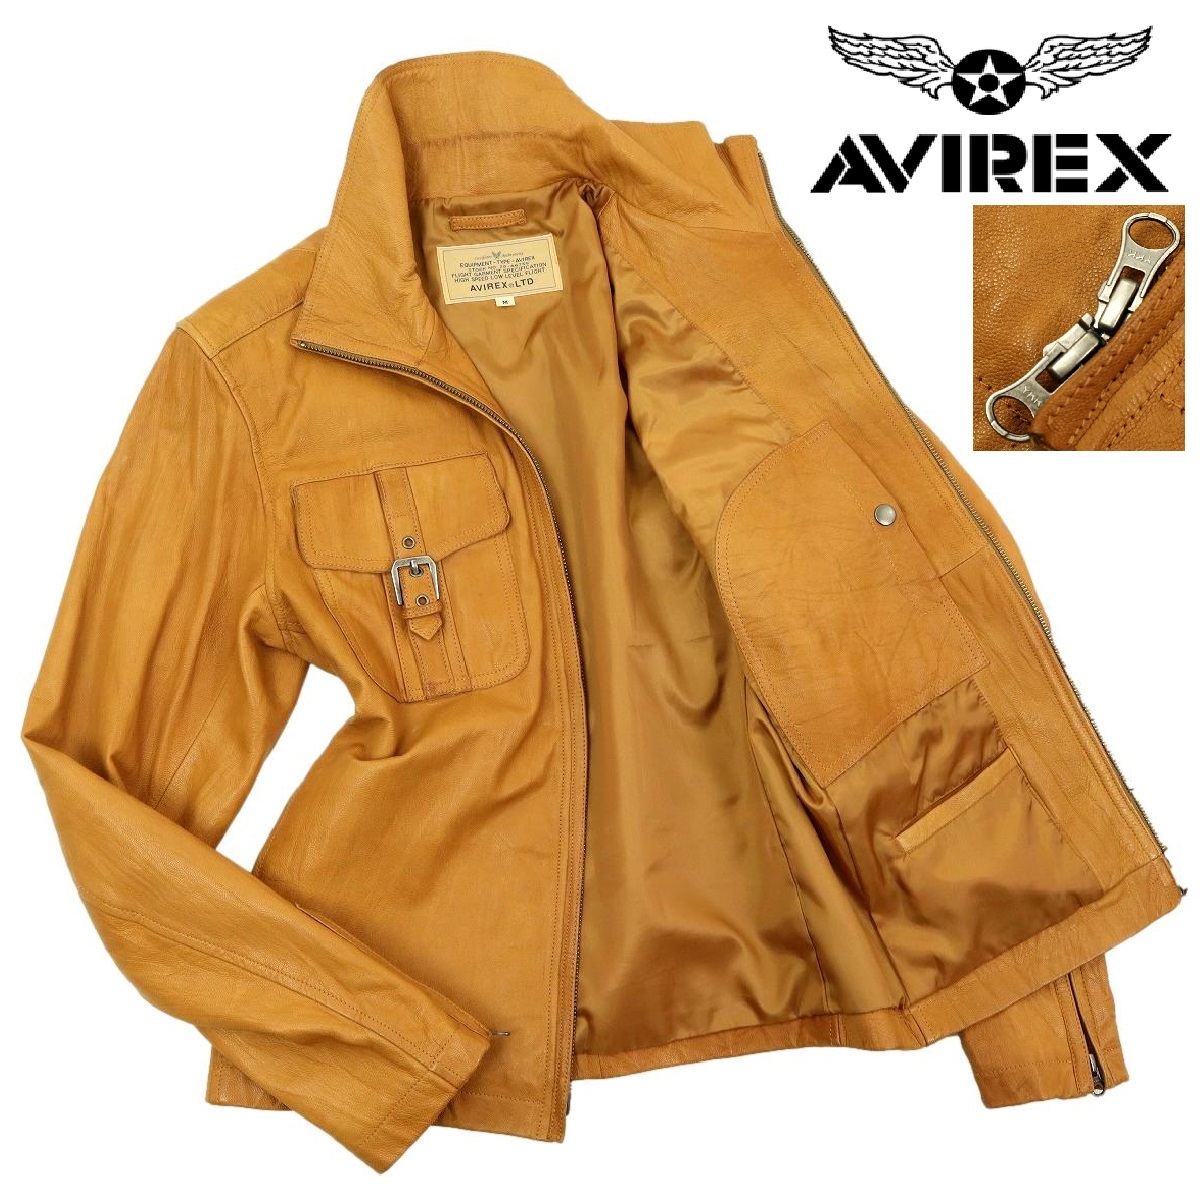 【B1766】【美品】AVIREX アビレックス レザージャケット オールレザー 山羊革 6161066 サイズM